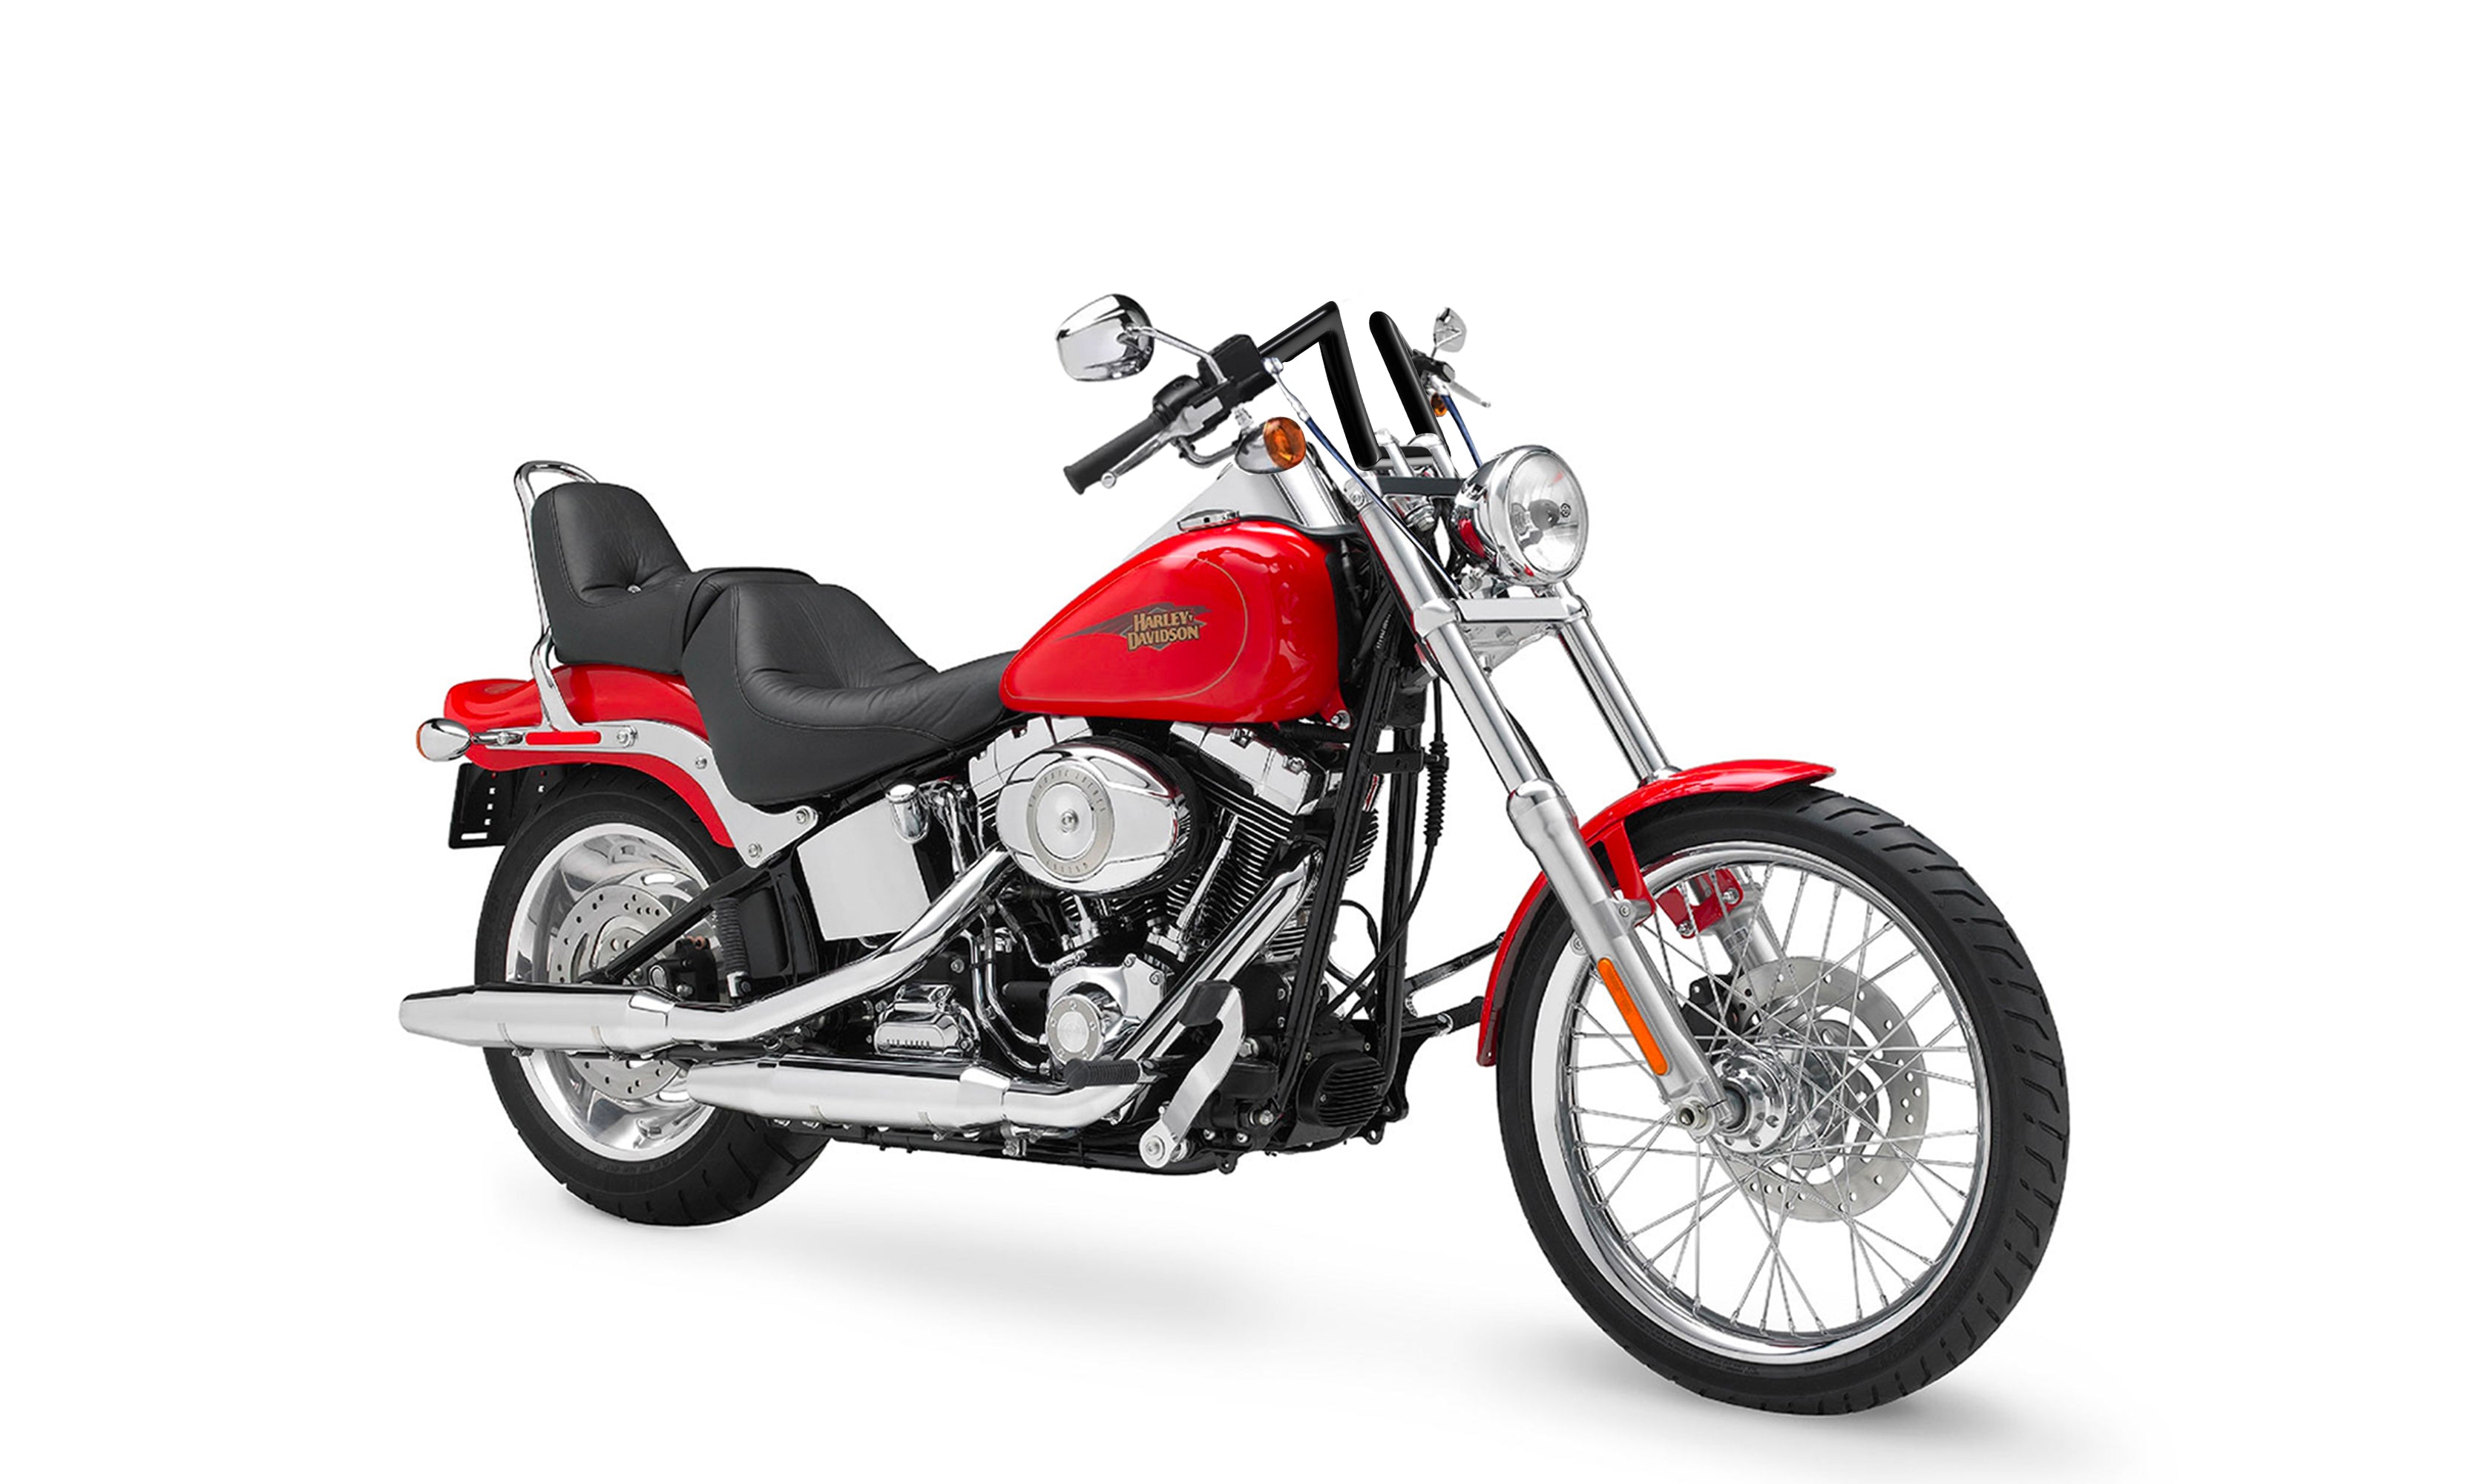 Viking Iron Born Z Handlebar For Harley Softail Custom FXSTC Gloss Black Bag on Bike View @expand